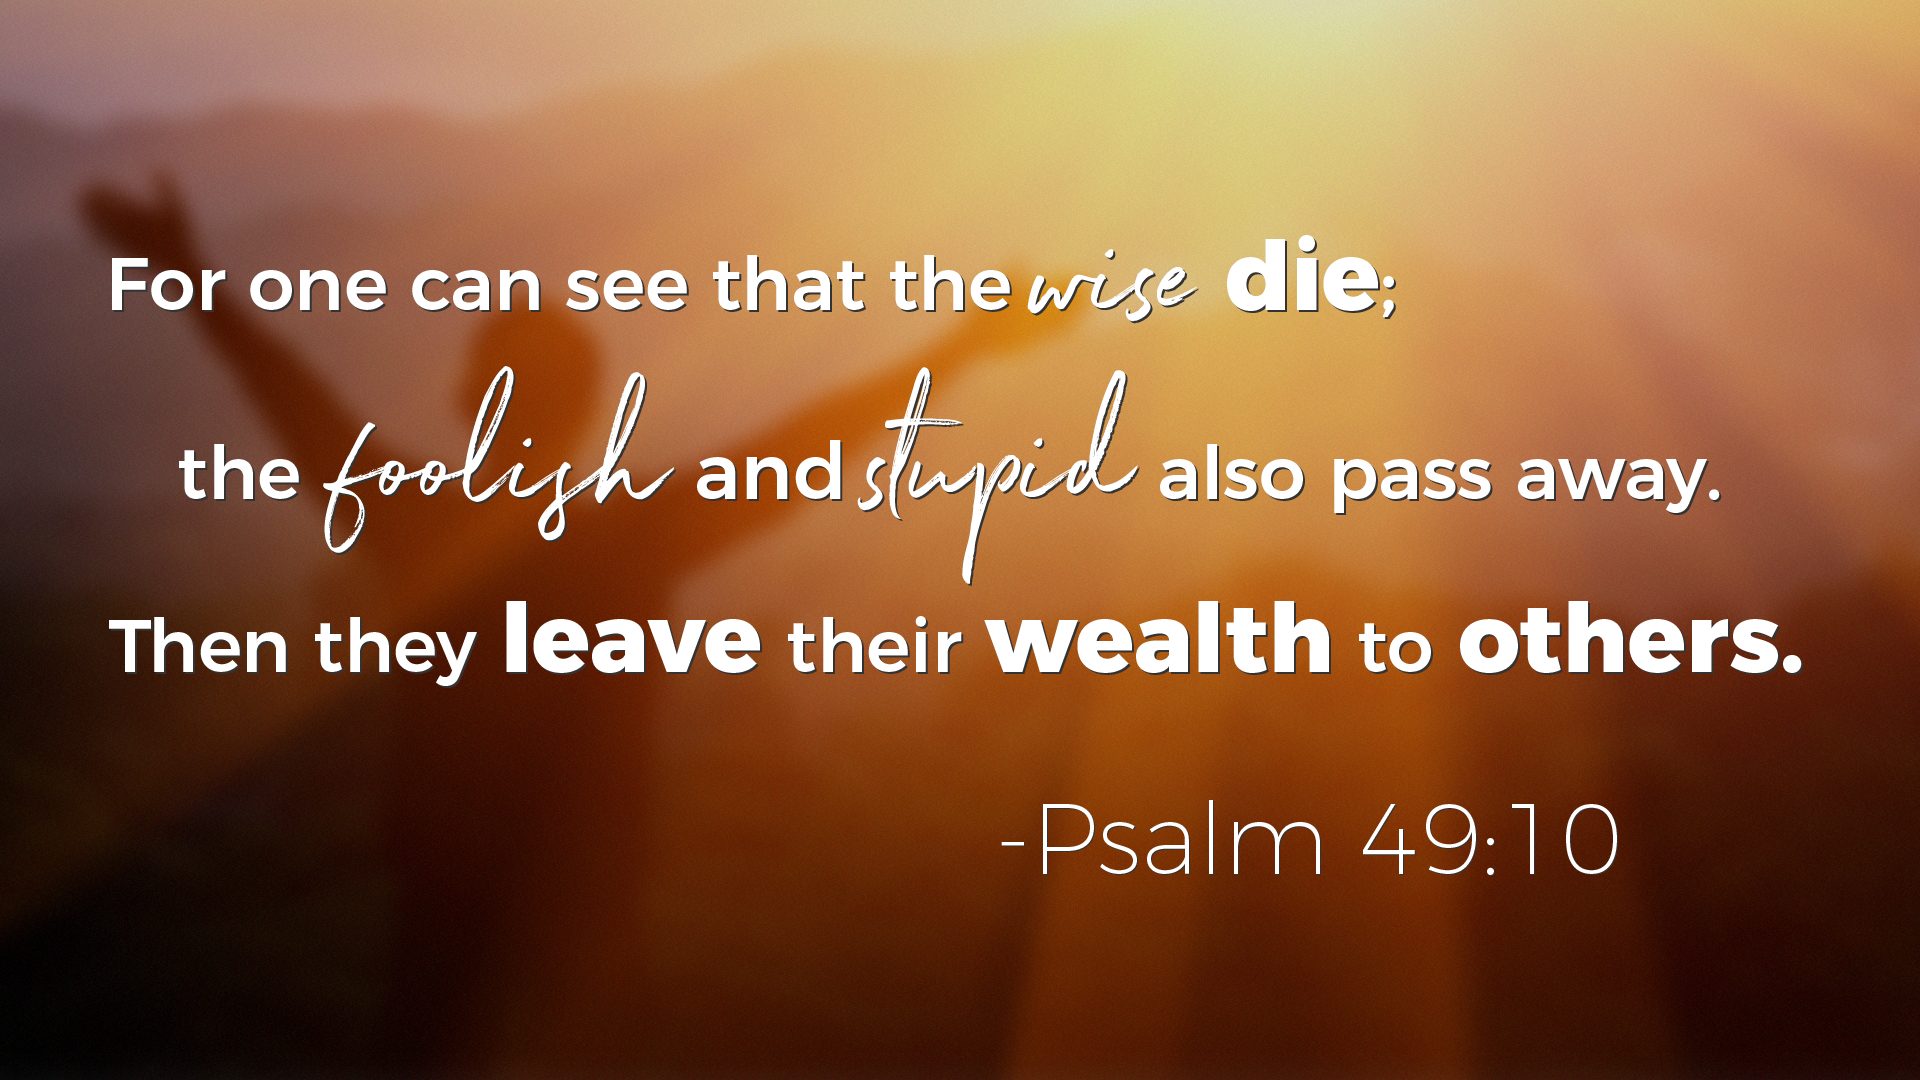 Psalms on Wealth - Psalm 49:10